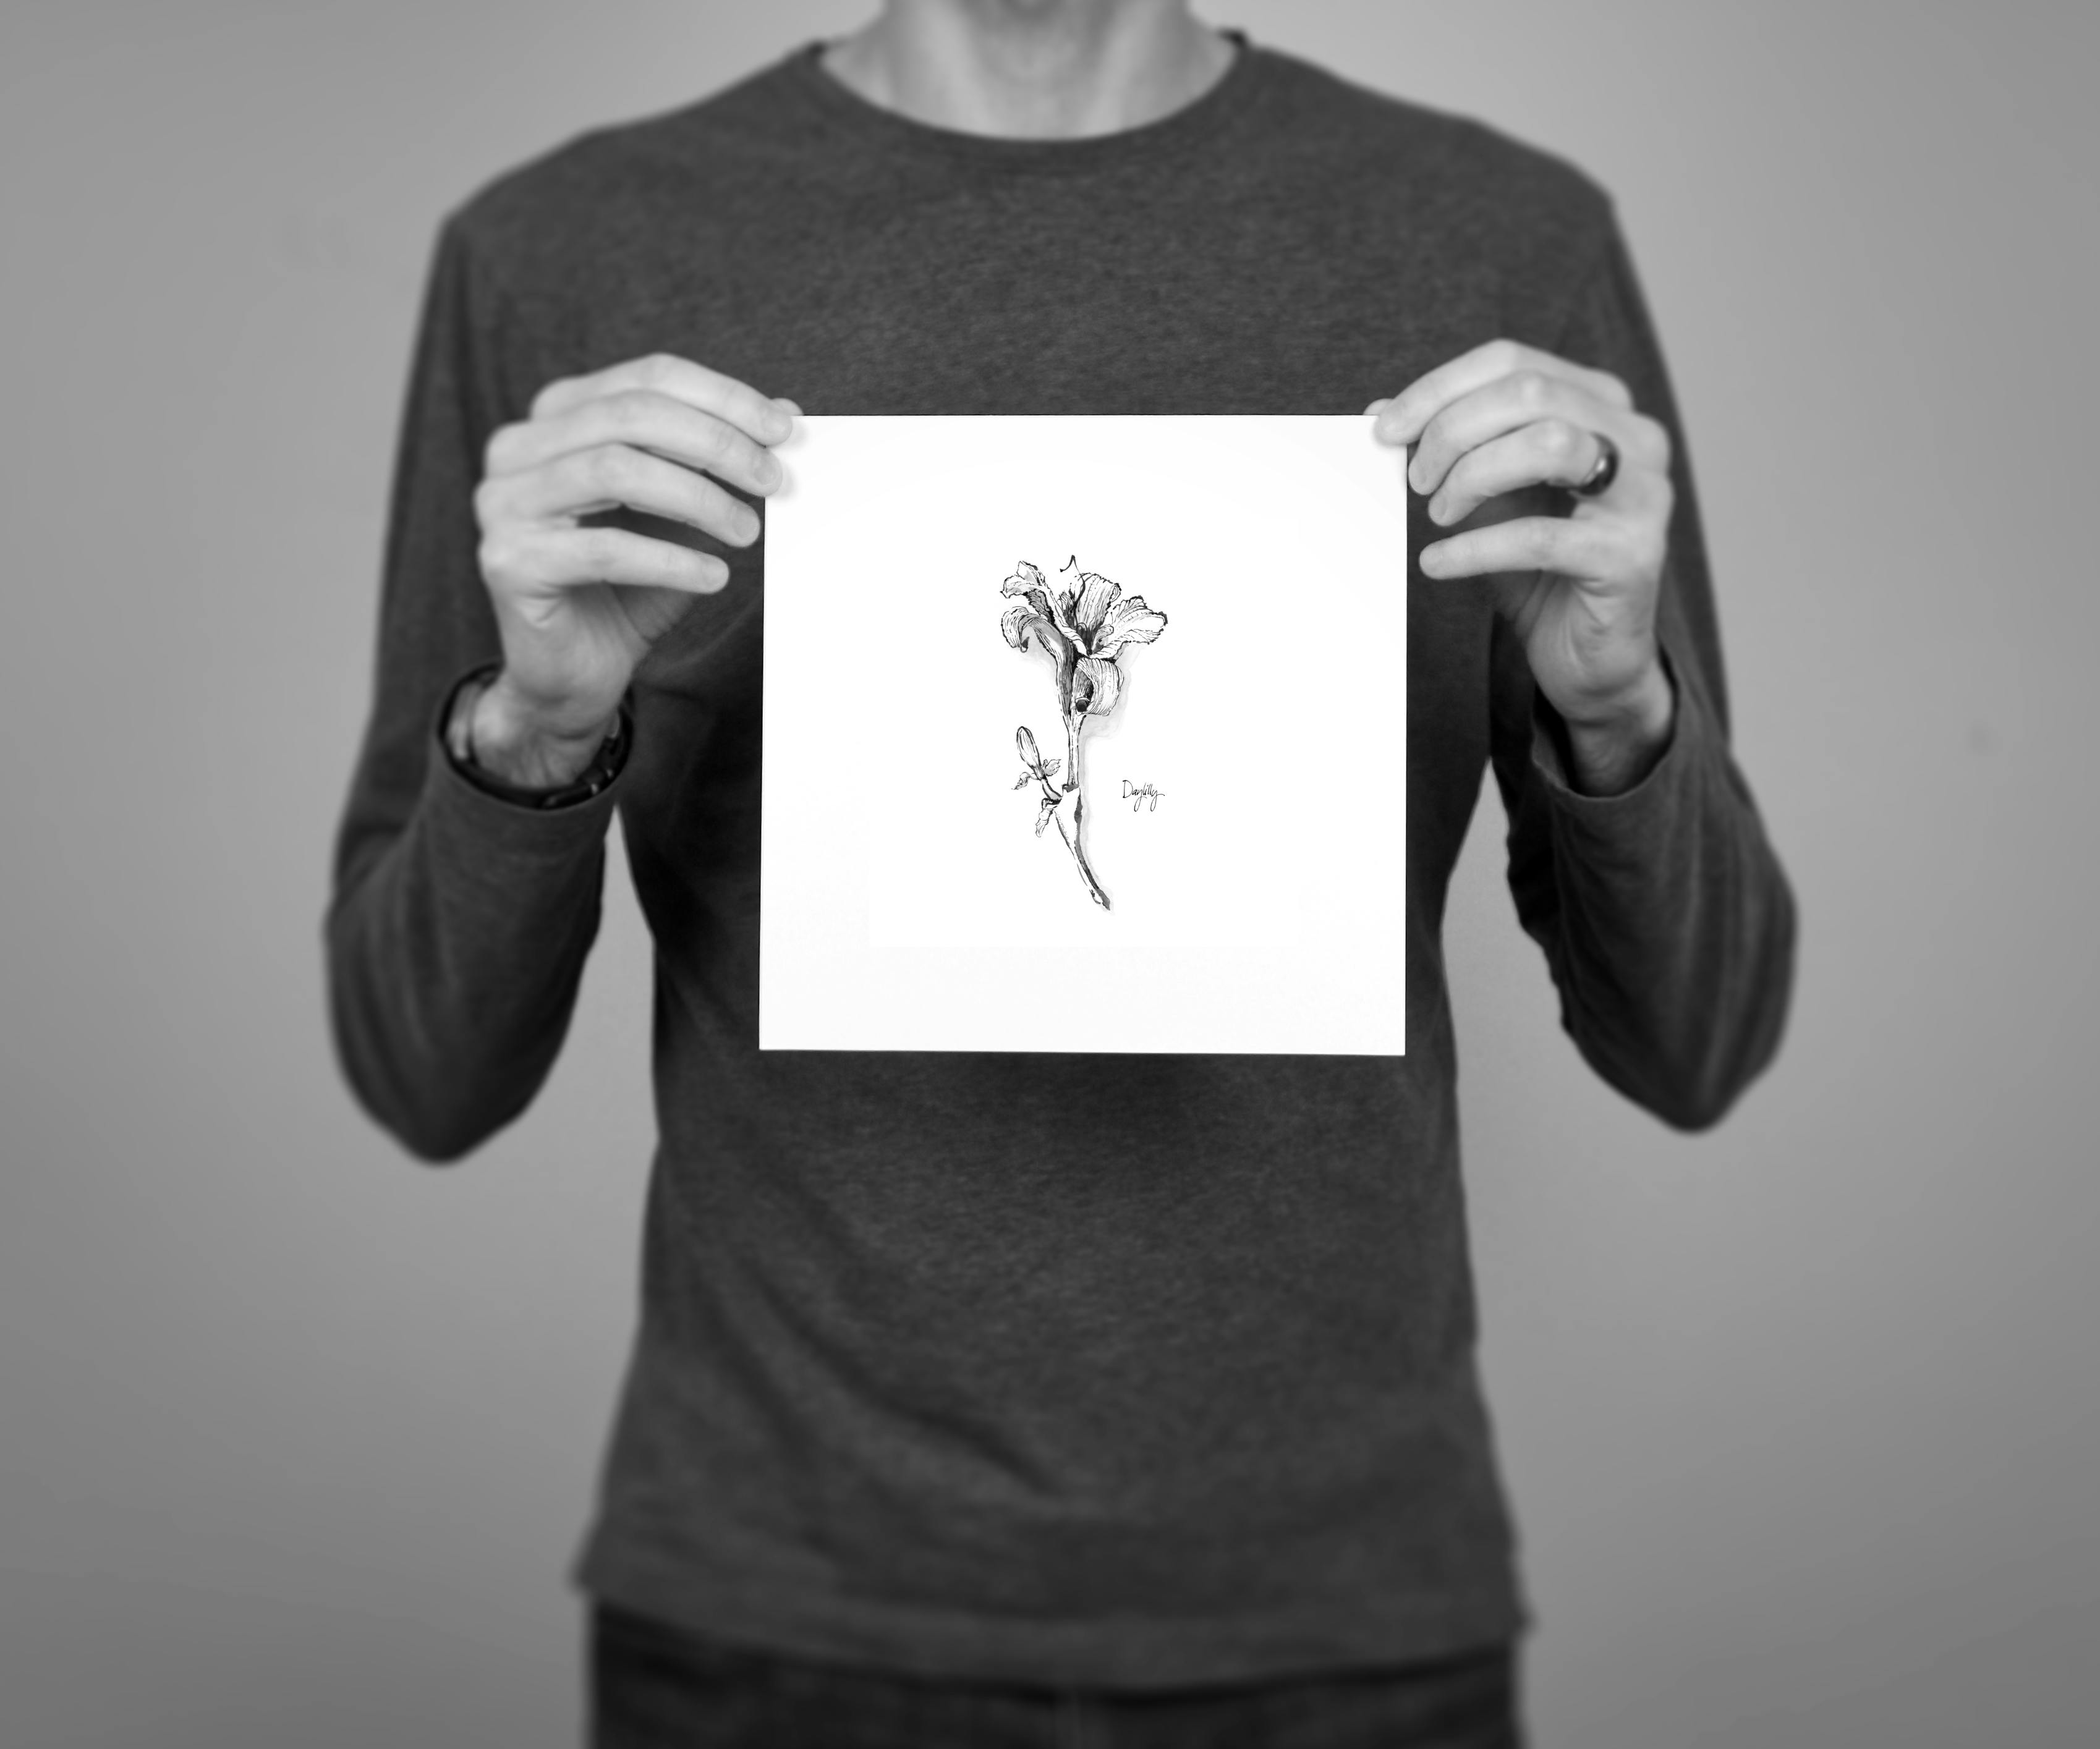 Daylily, 6 x 6” giclee print